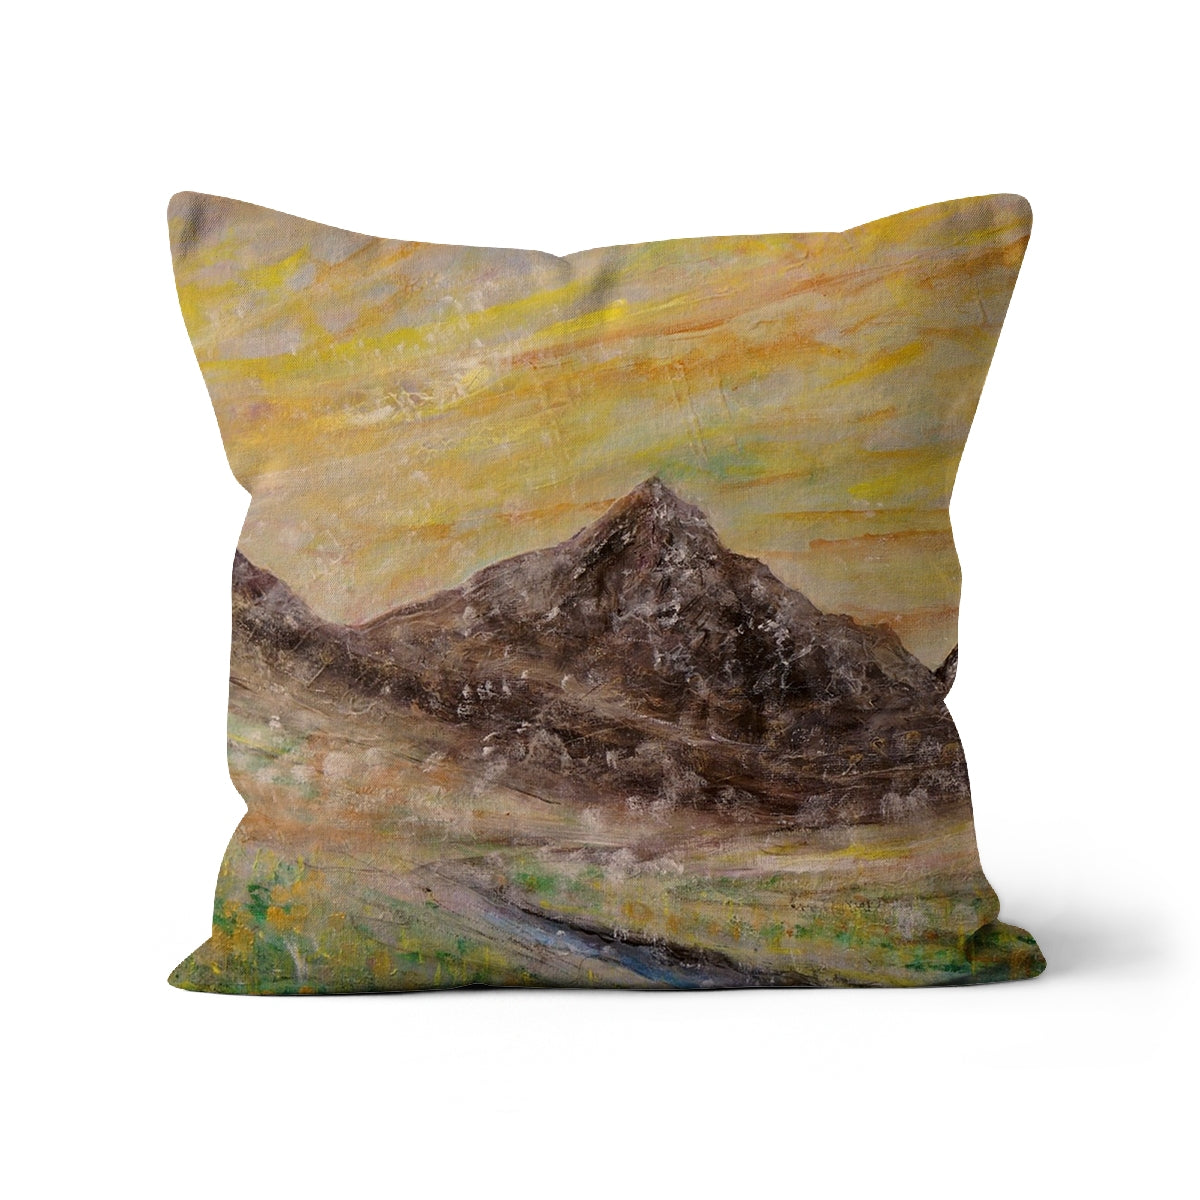 Glen Rosa Mist Arran Art Gifts Cushion-Cushions-Arran Art Gallery-Canvas-24"x24"-Paintings, Prints, Homeware, Art Gifts From Scotland By Scottish Artist Kevin Hunter